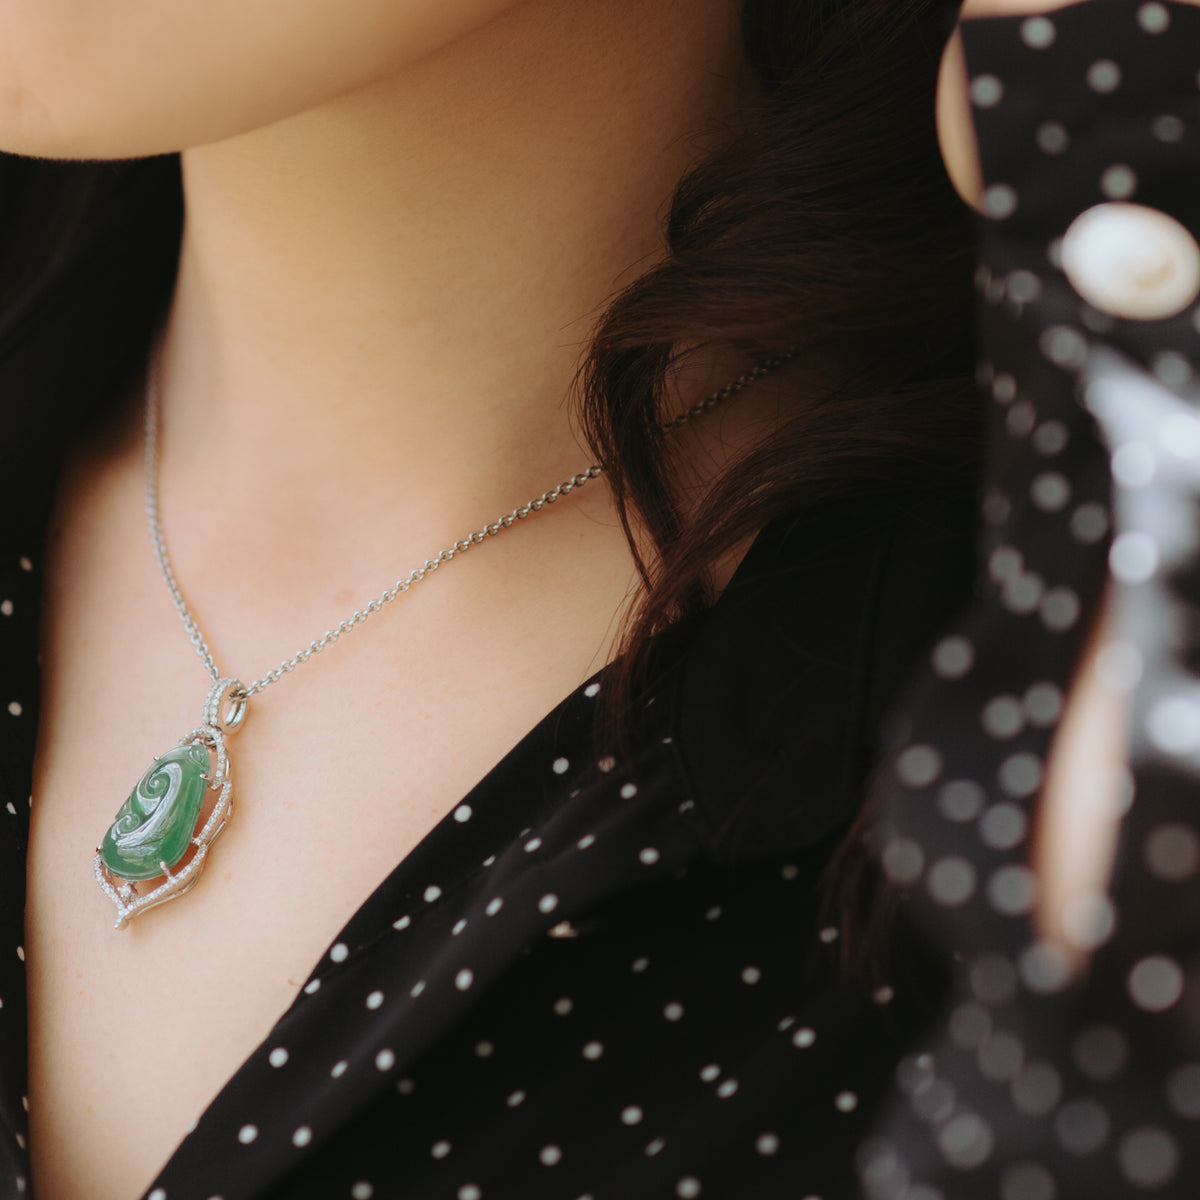 Wearing green jade pendant with stylish dress